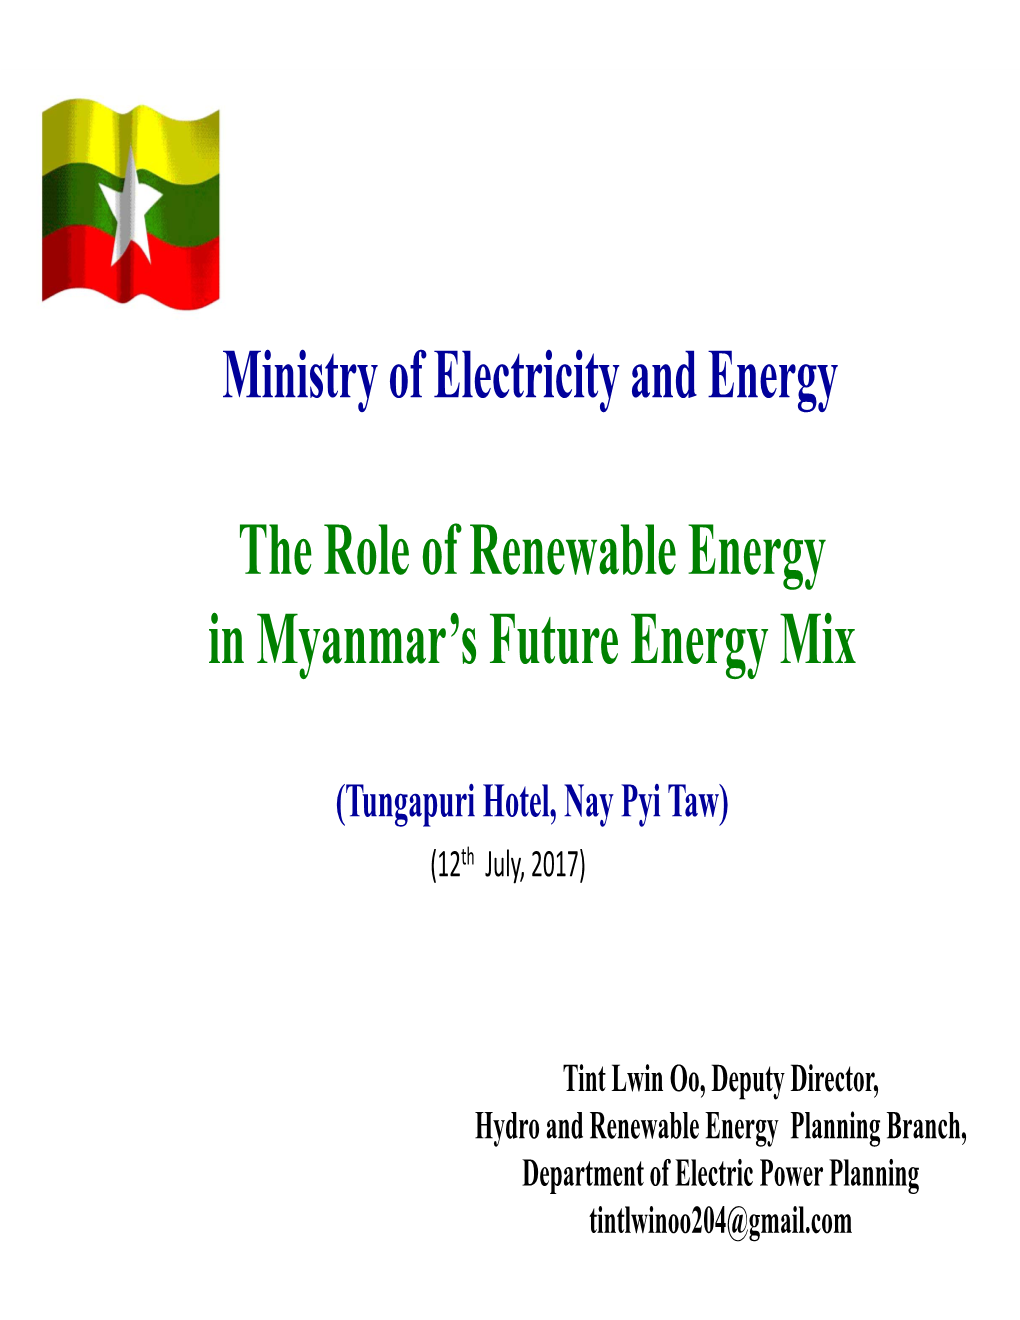 The Role of Renewable Energy in Myanmar's Future Energy